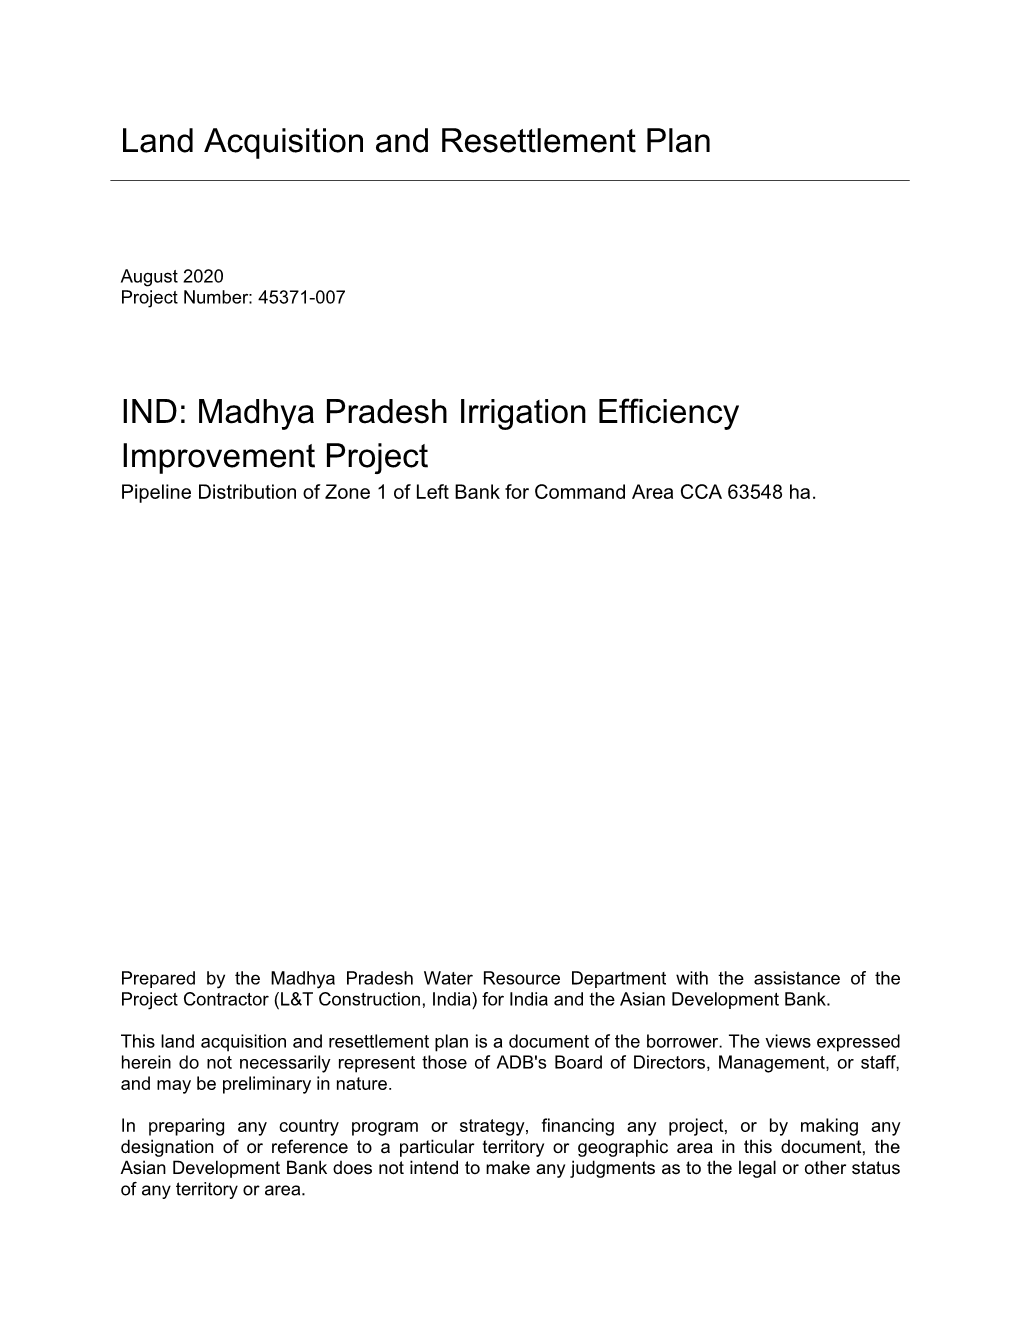 45371-007: Madhya Pradesh Irrigation Efficiency Improvement Project